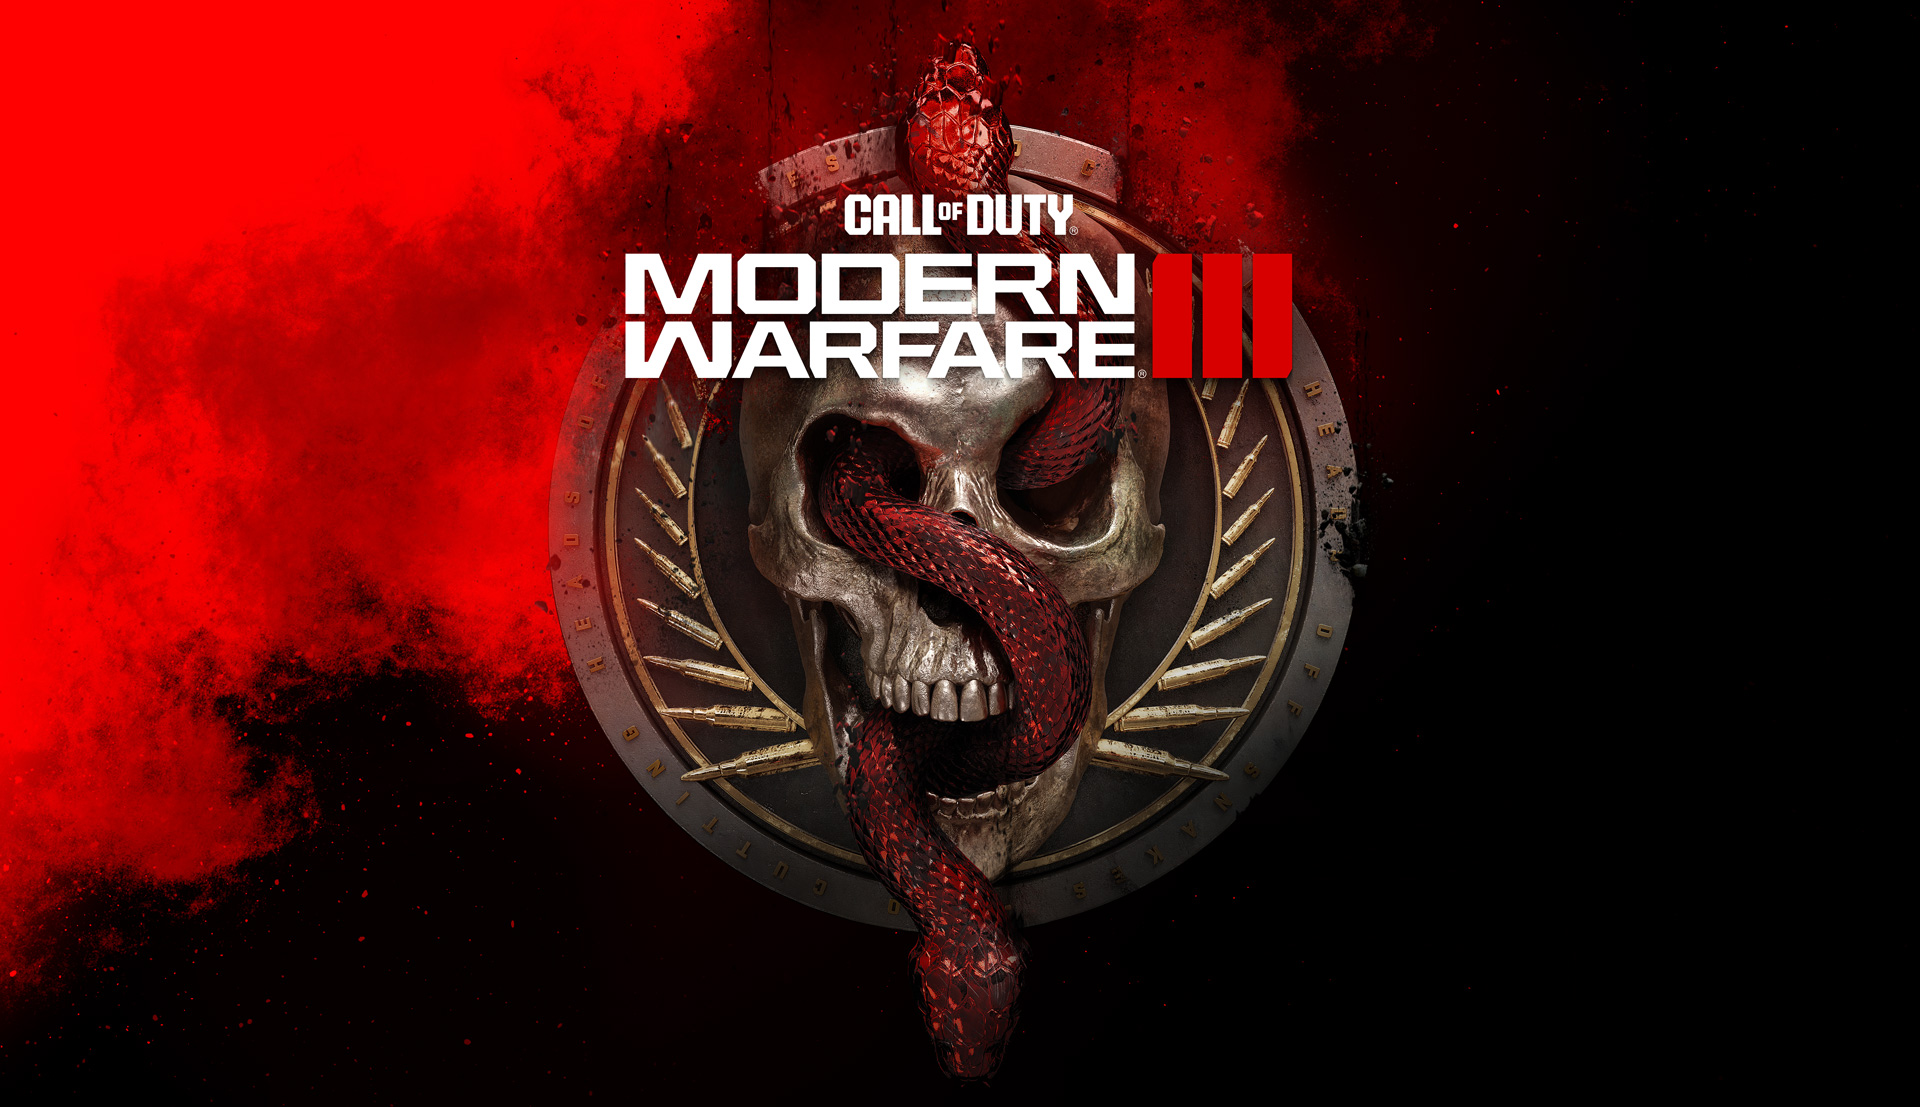 Call of Duty: Modern Warfare III Beta Participation Rewards